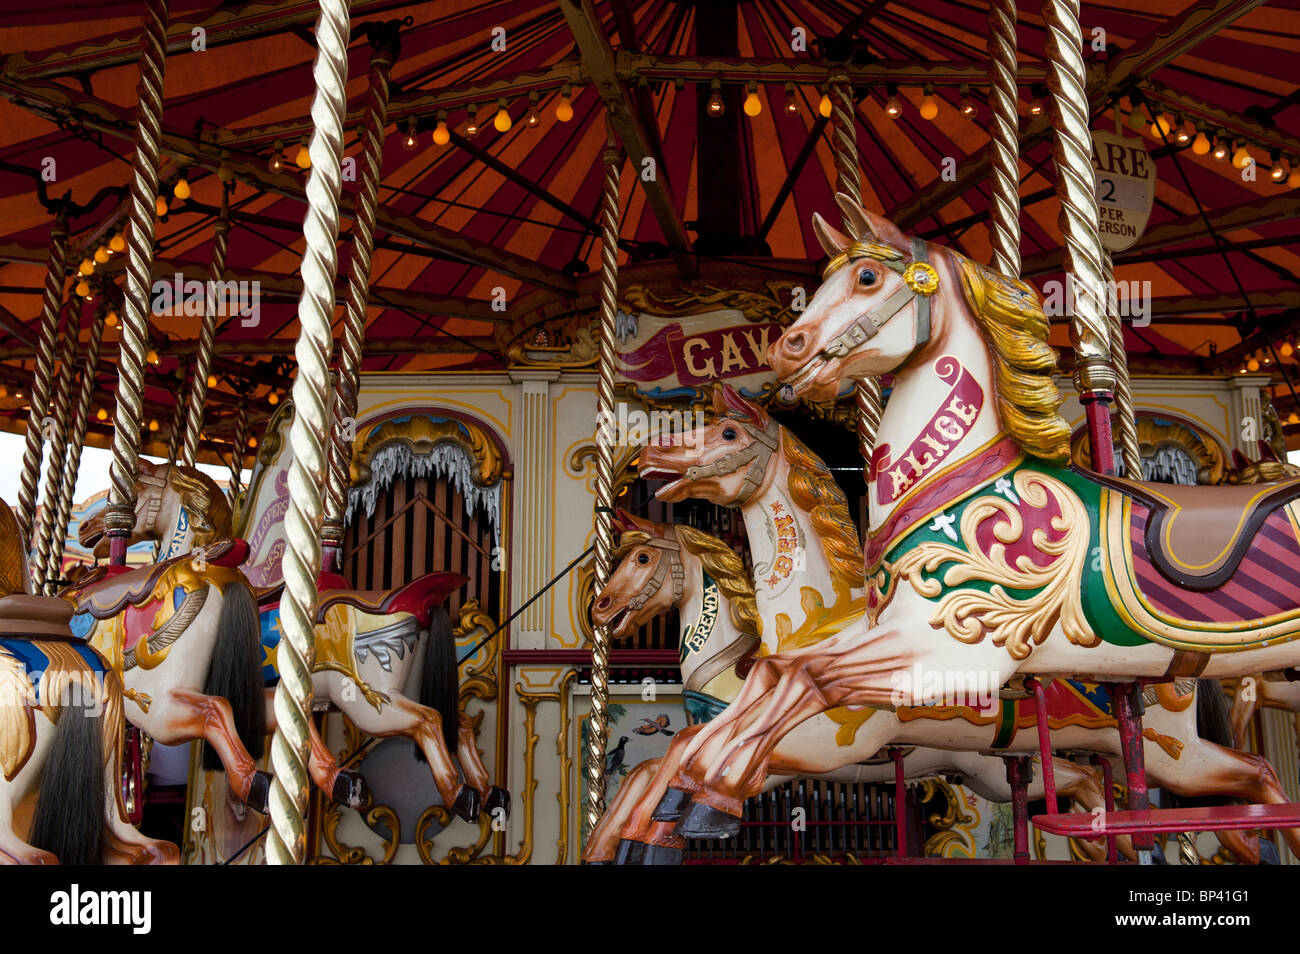 Steam Galloping horse carousel fairground ride at a  steam fair in England Stock Photo